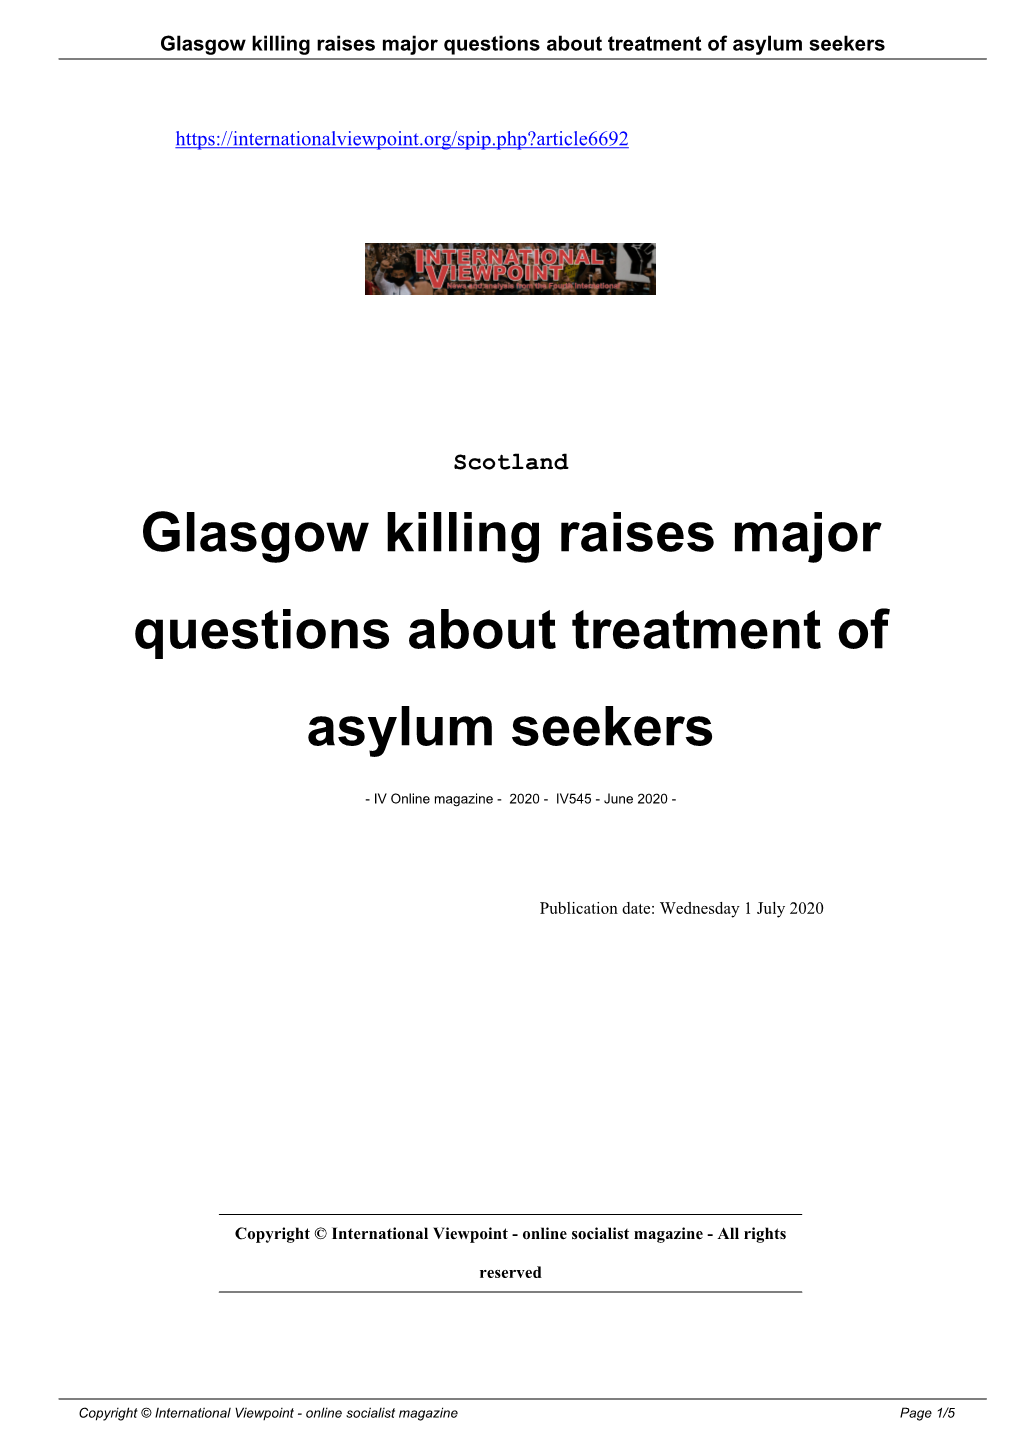 Glasgow Killing Raises Major Questions About Treatment of Asylum Seekers